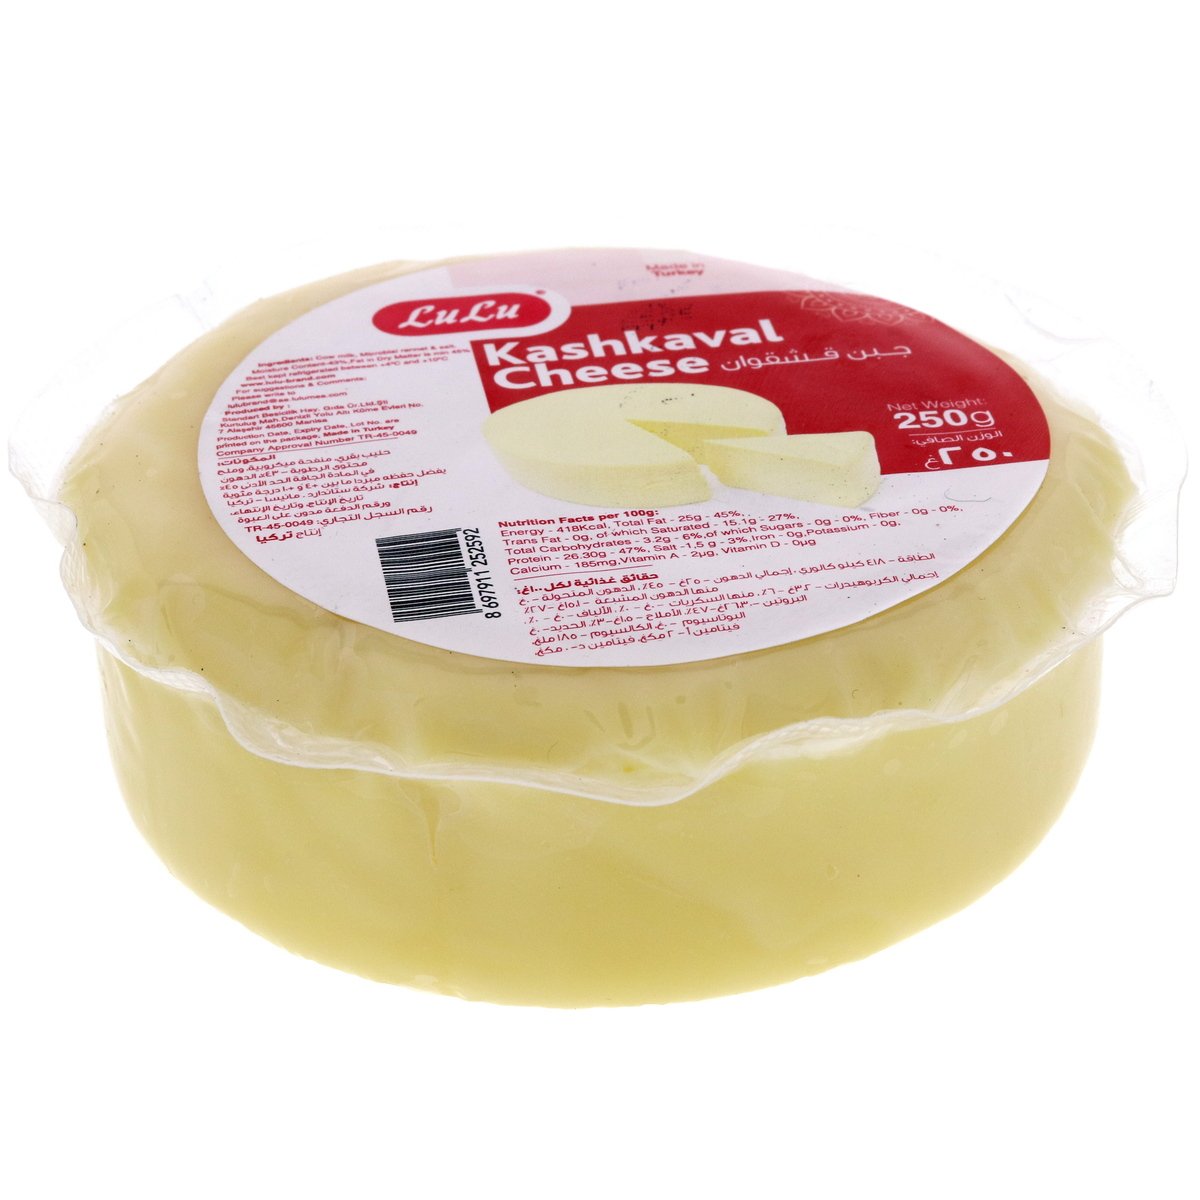 LuLu Kashkaval Cheese 250 g